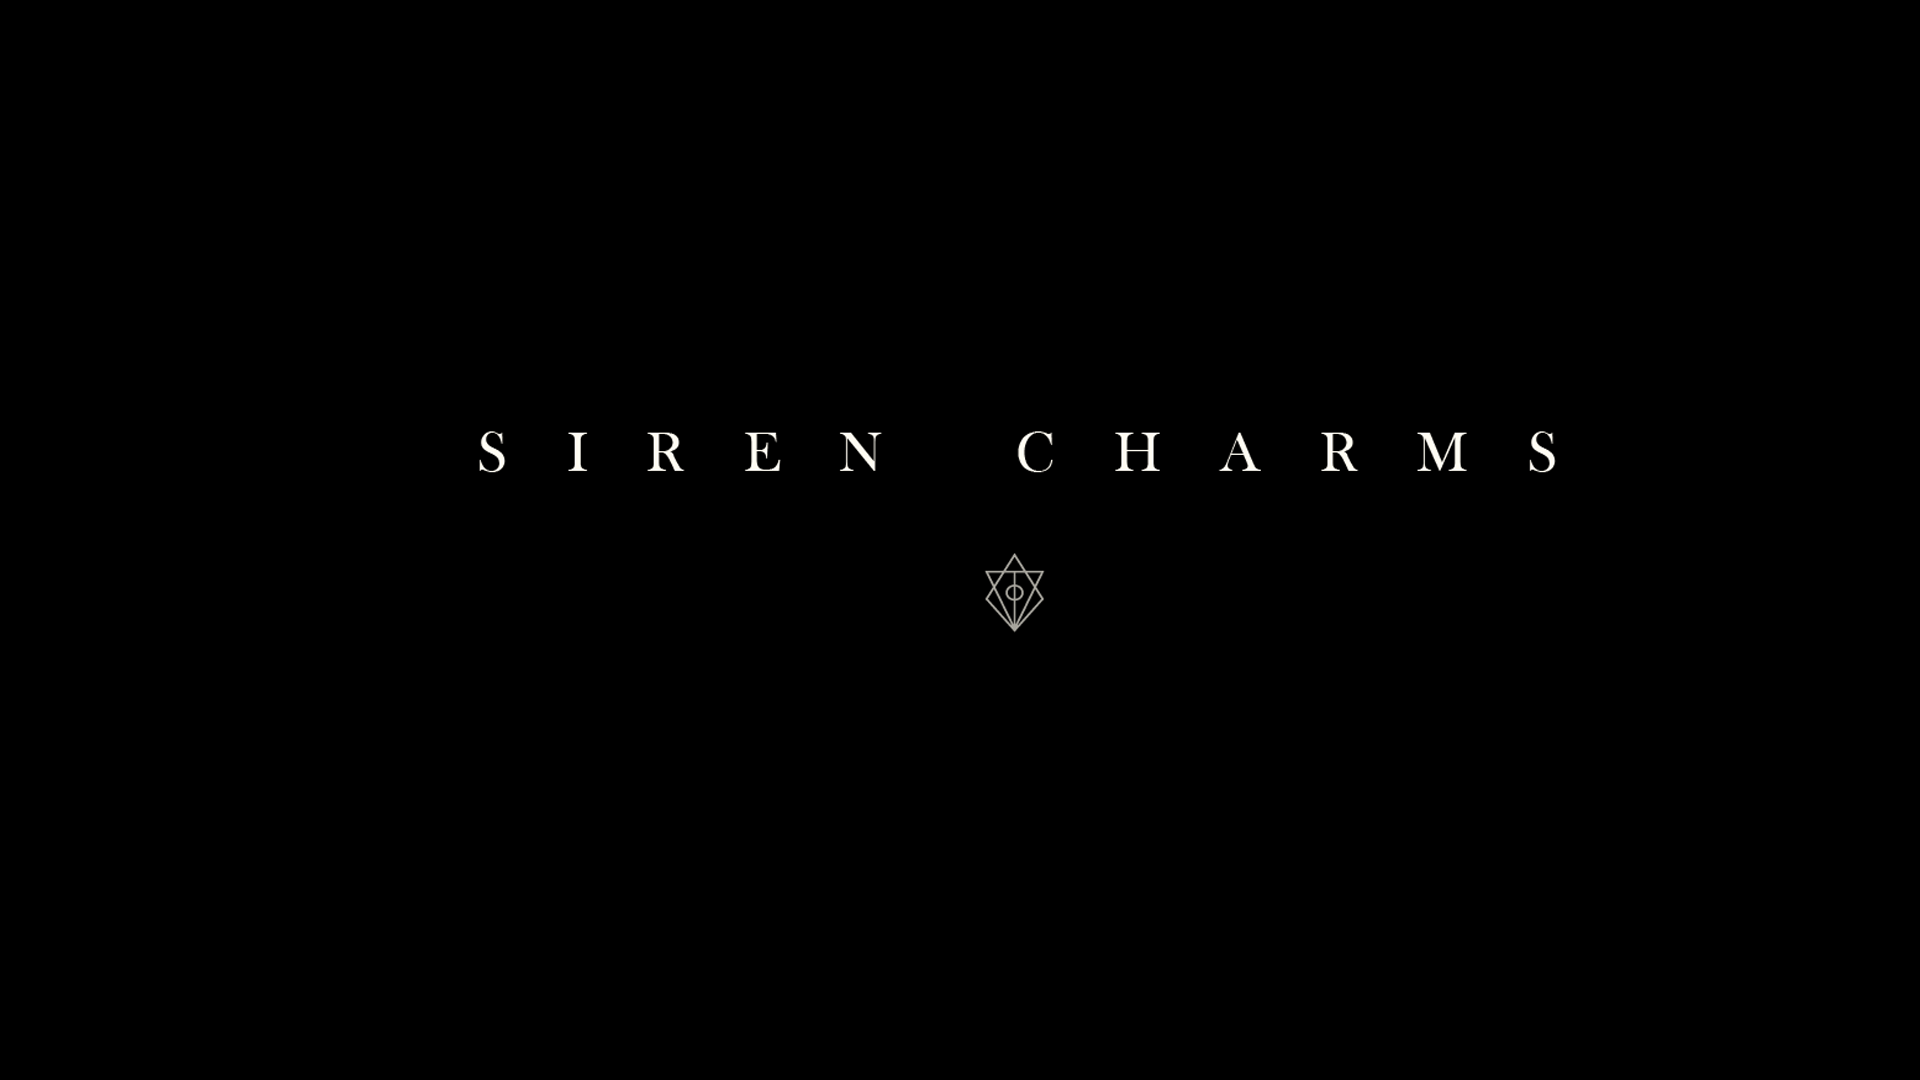 Siren Charms In Flames Typography Text Artwork Minimalism Black Background Alternative Metal Heavy M 1920x1080